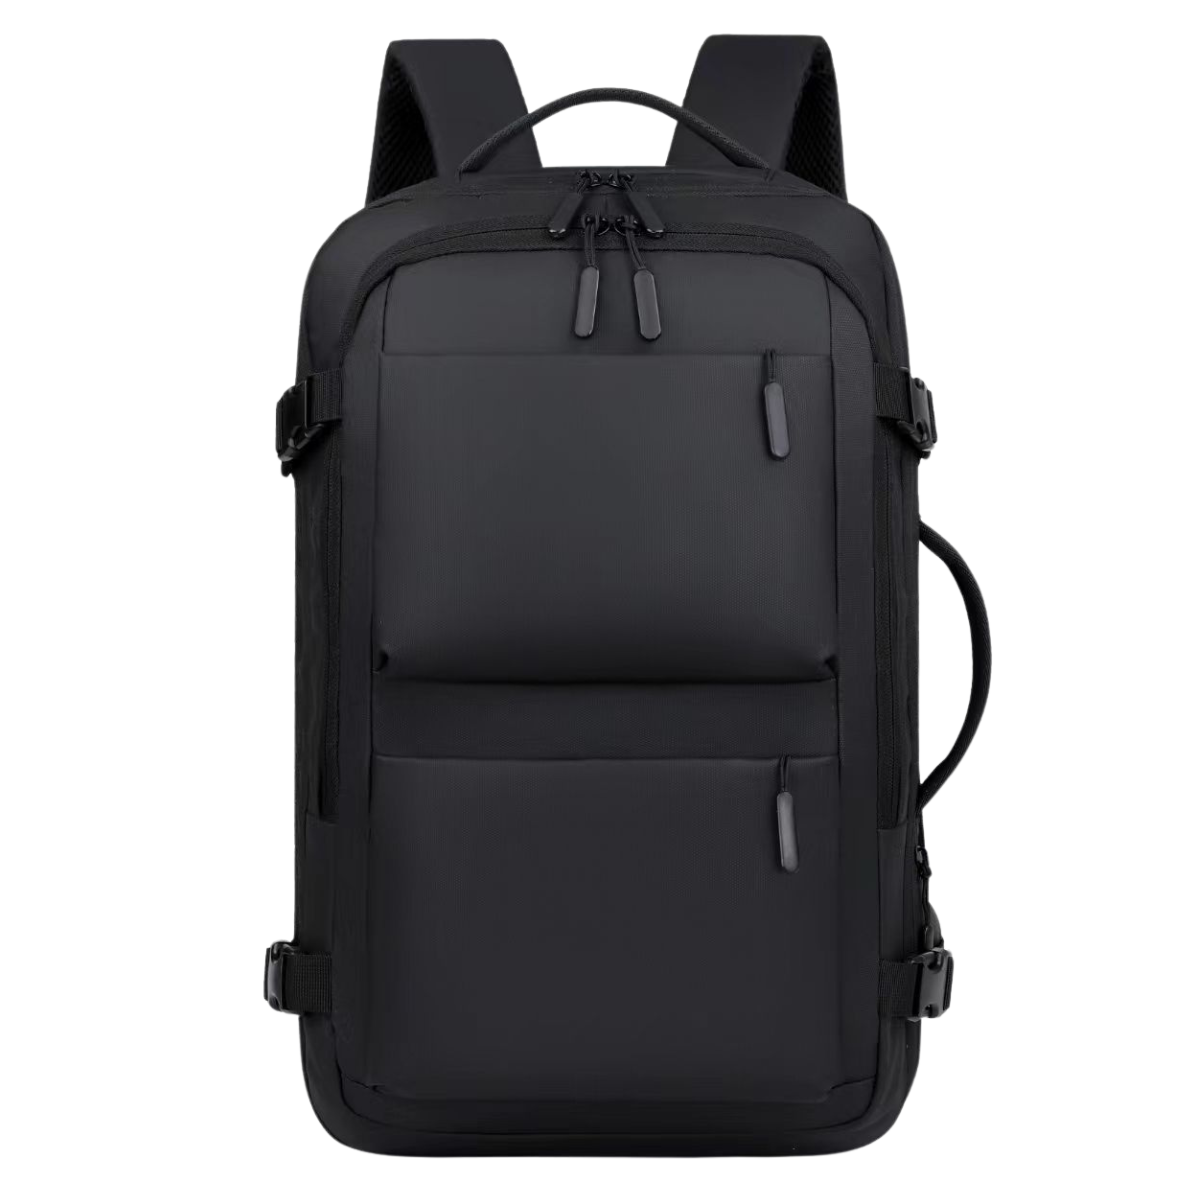 ExpandMax Backpack